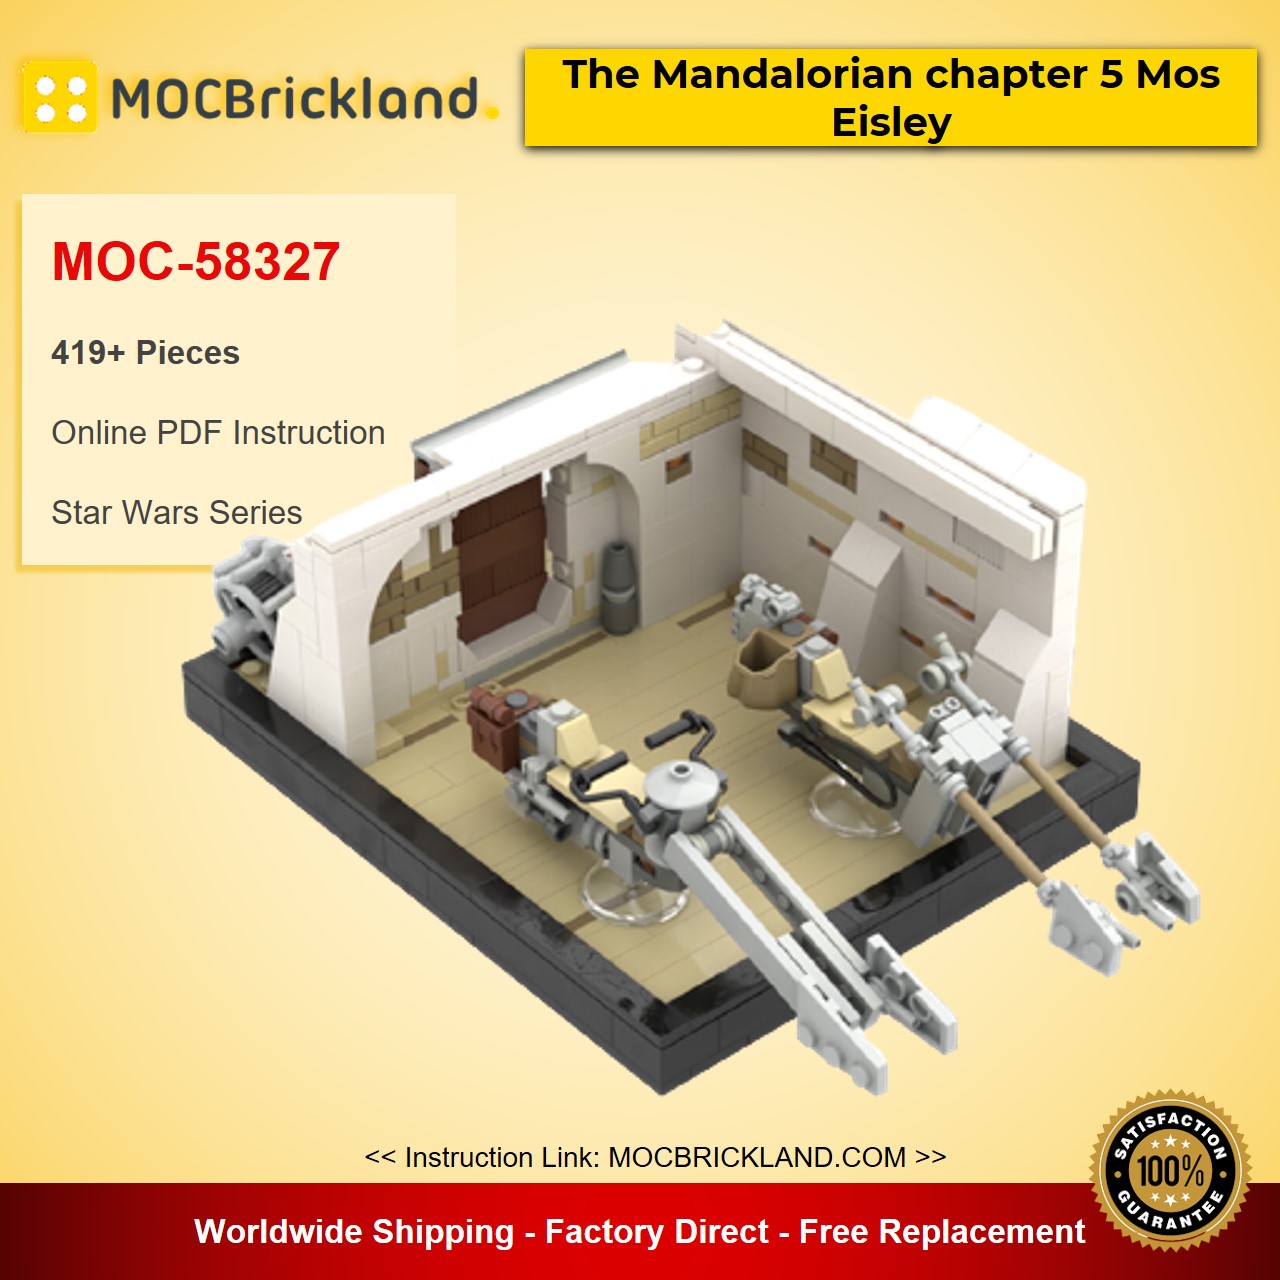 MOCBRICKLAND MOC-58327 The Mandalorian Chapter 5 Mos Eisley